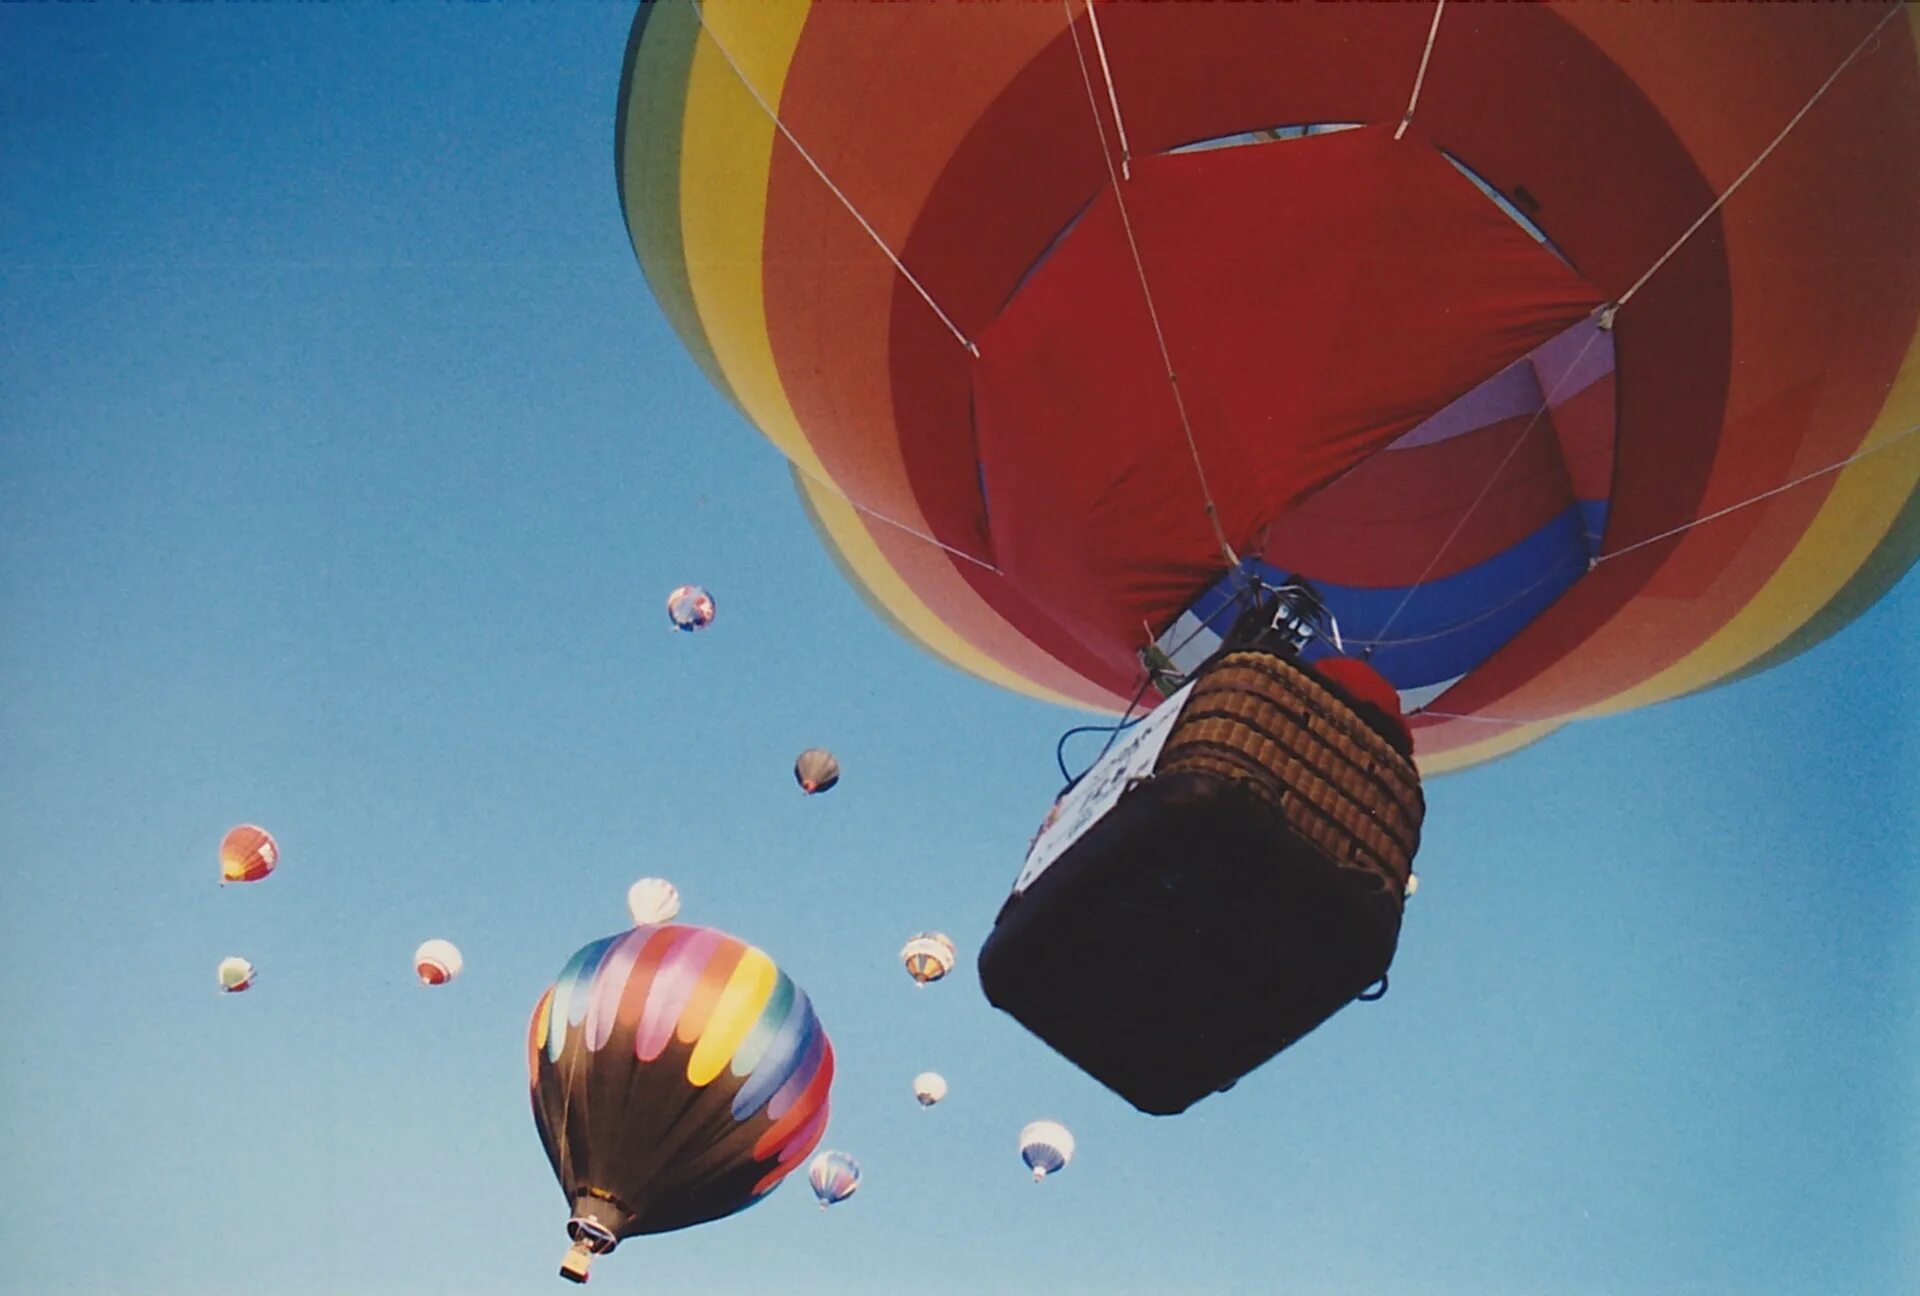 Груз на воздушном шаре. Воздушный шар. Полет на воздушных шариках. Воздушный шар в небе. Воздушный шар с людьми.